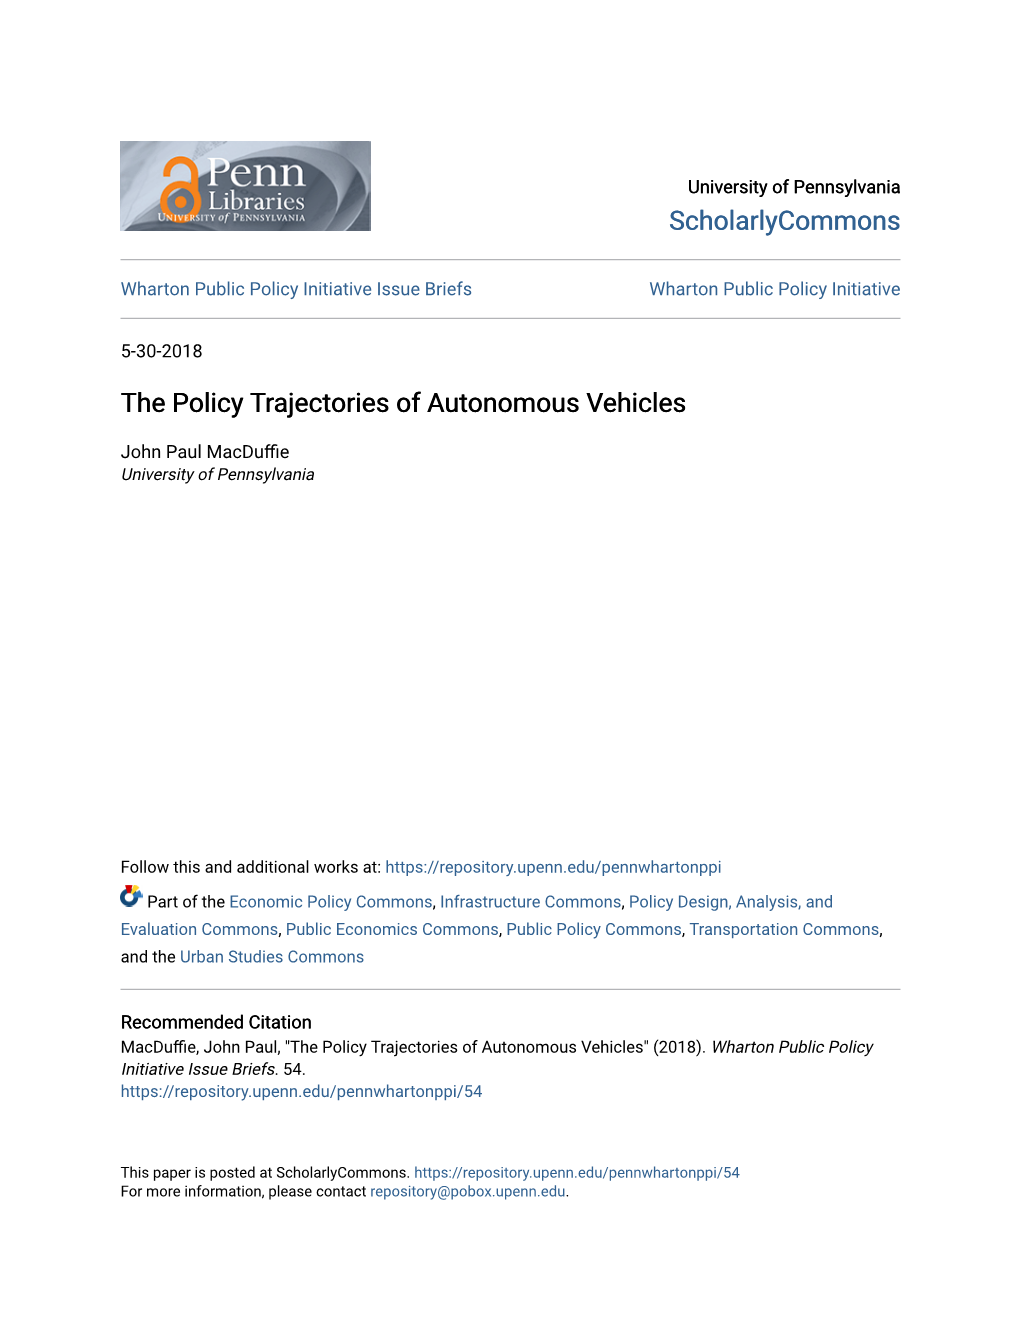 The Policy Trajectories of Autonomous Vehicles